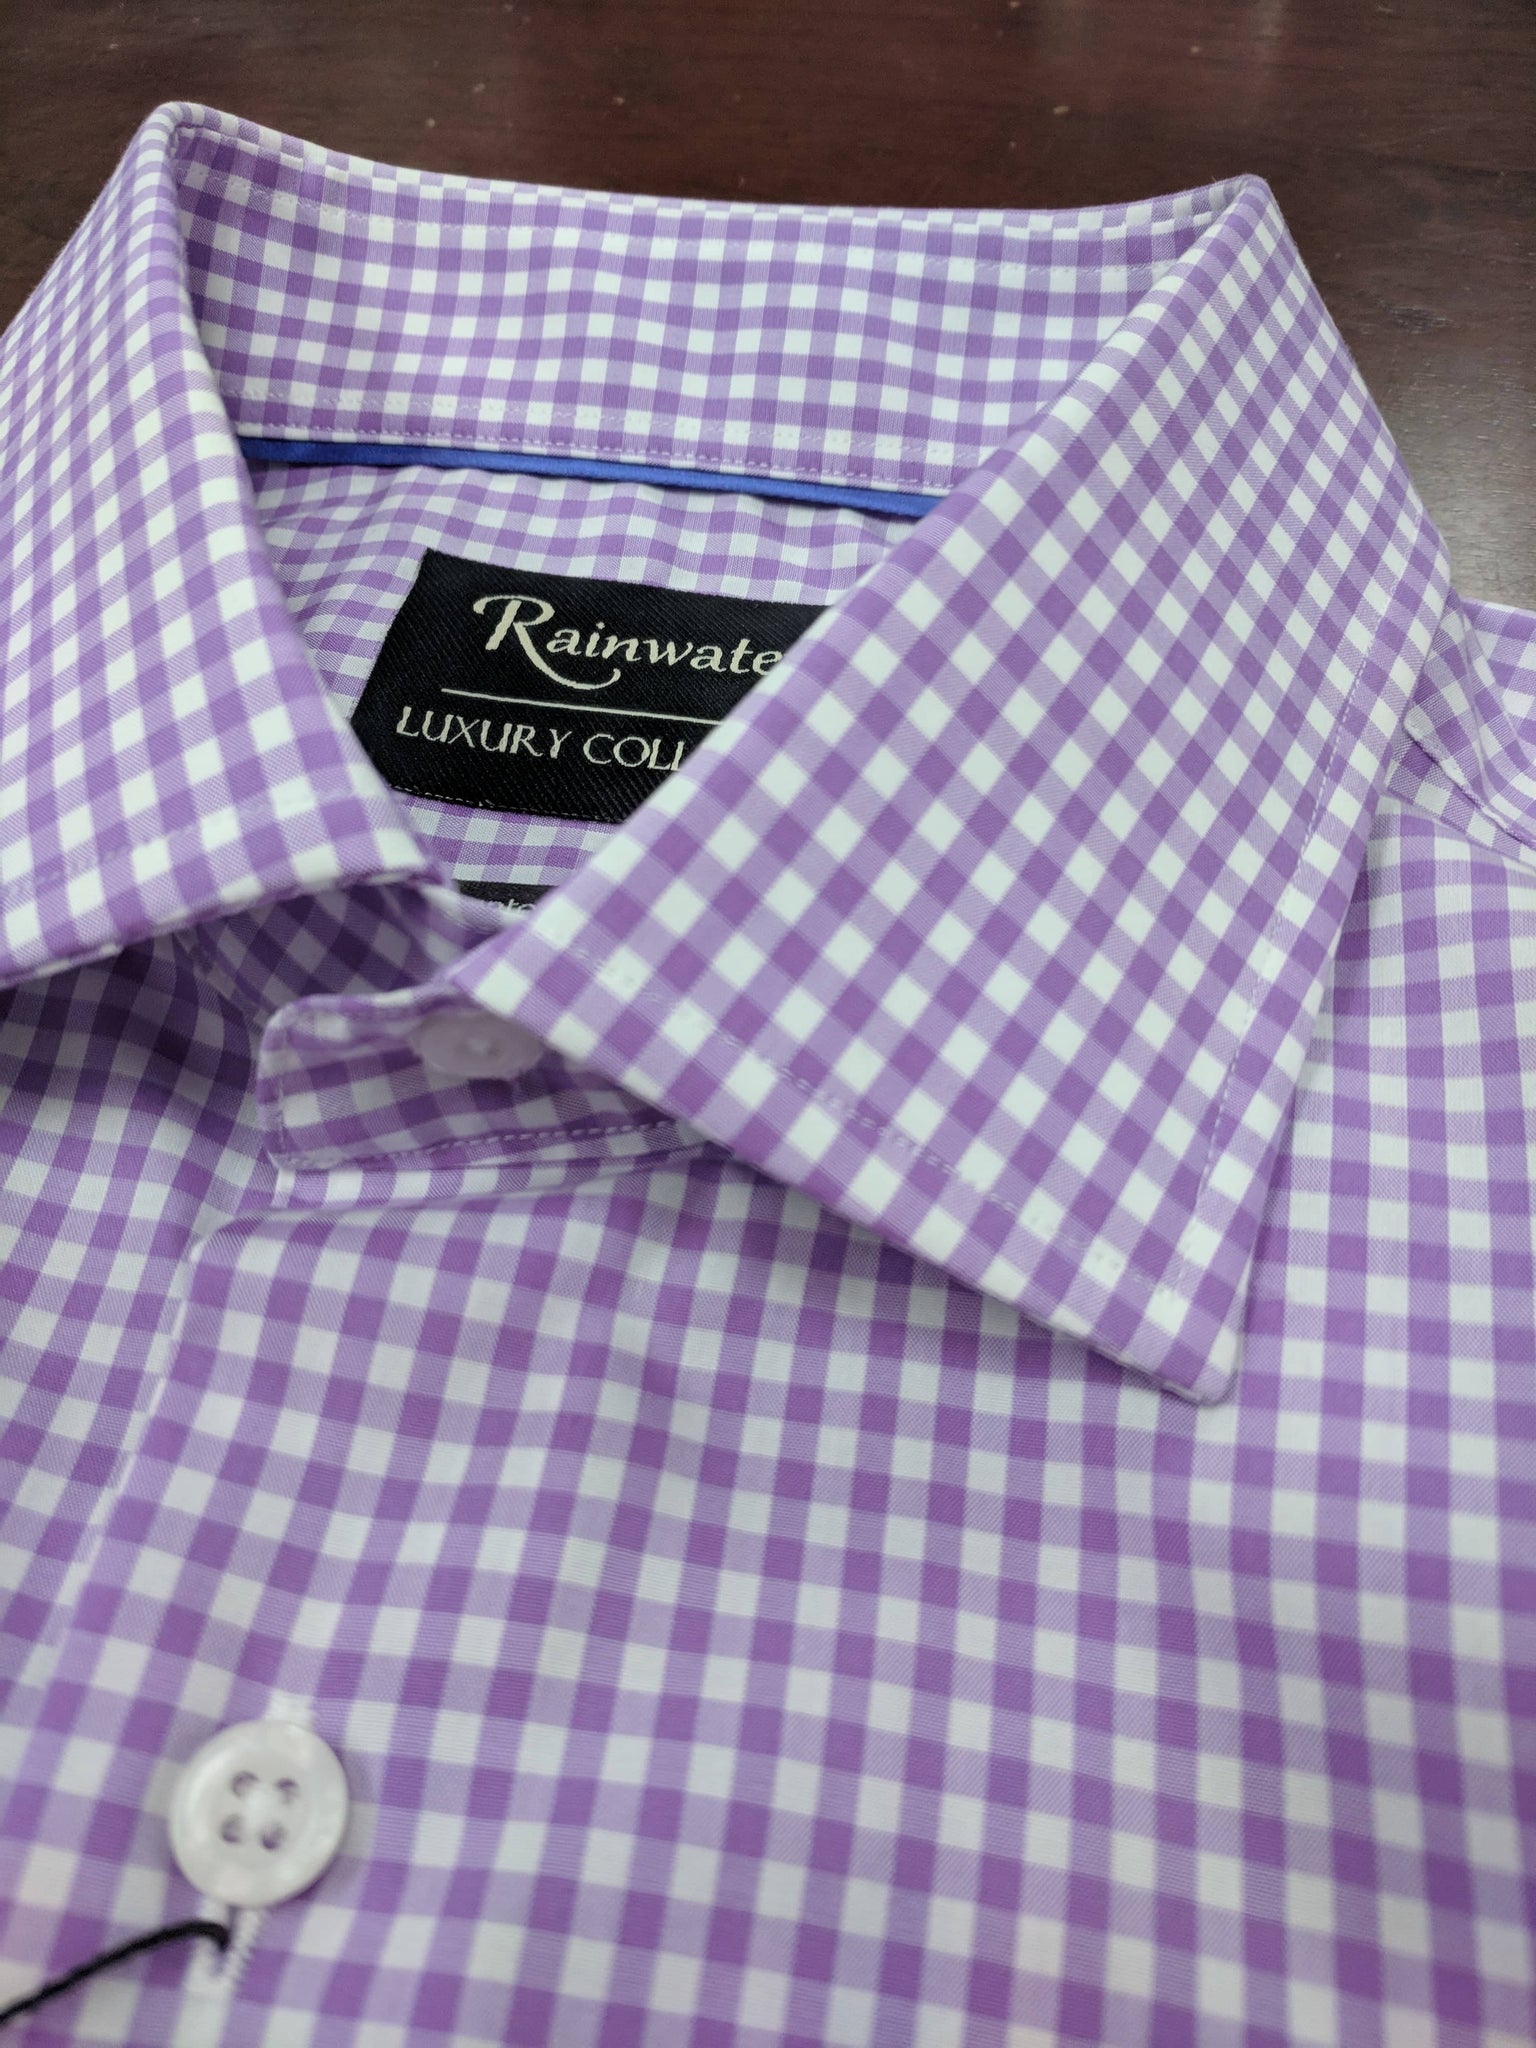 Rainwater's 80's 100% Cotton Lavender Gingham Spread Collar - Rainwater's Men's Clothing and Tuxedo Rental